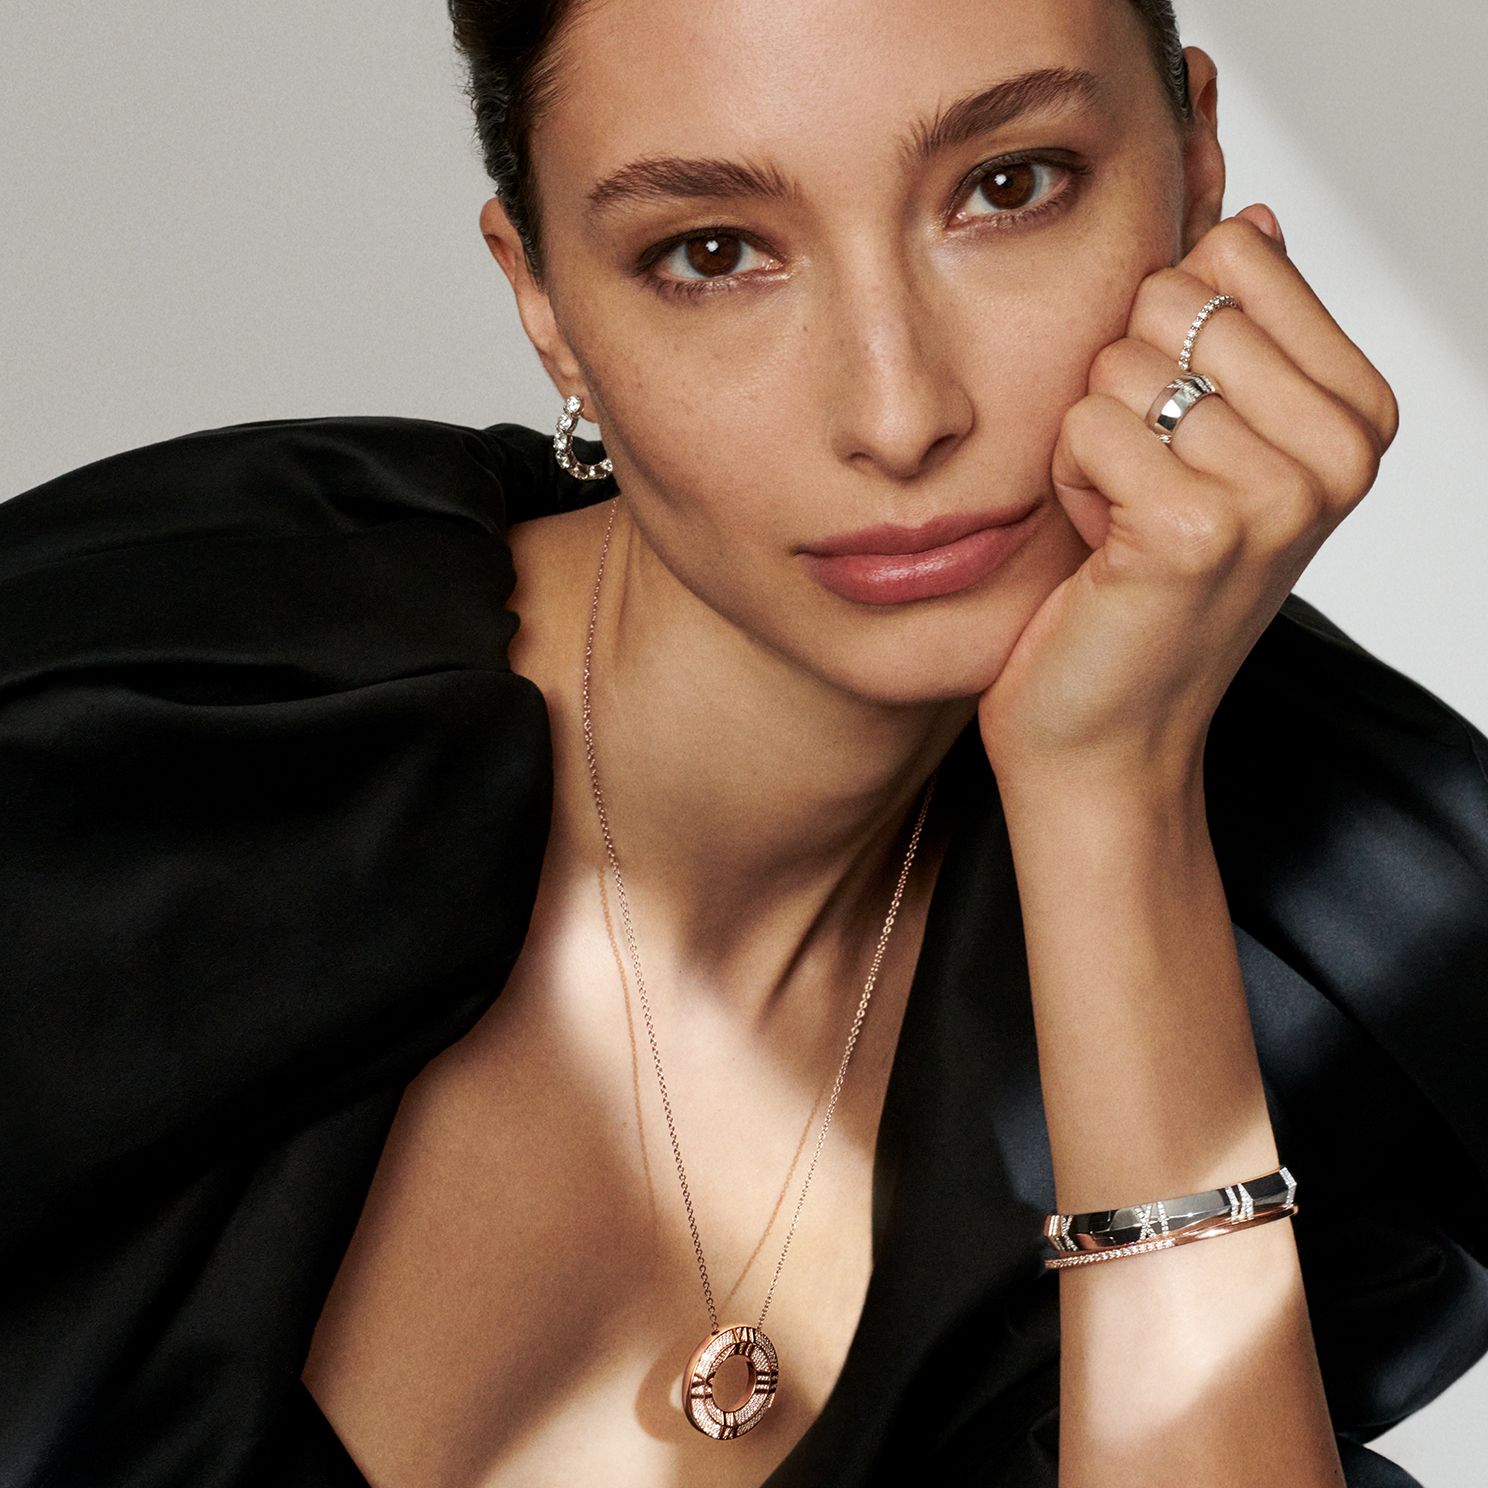 Atlas™: Roman Numeral Jewelry & Watches | Tiffany & Co.